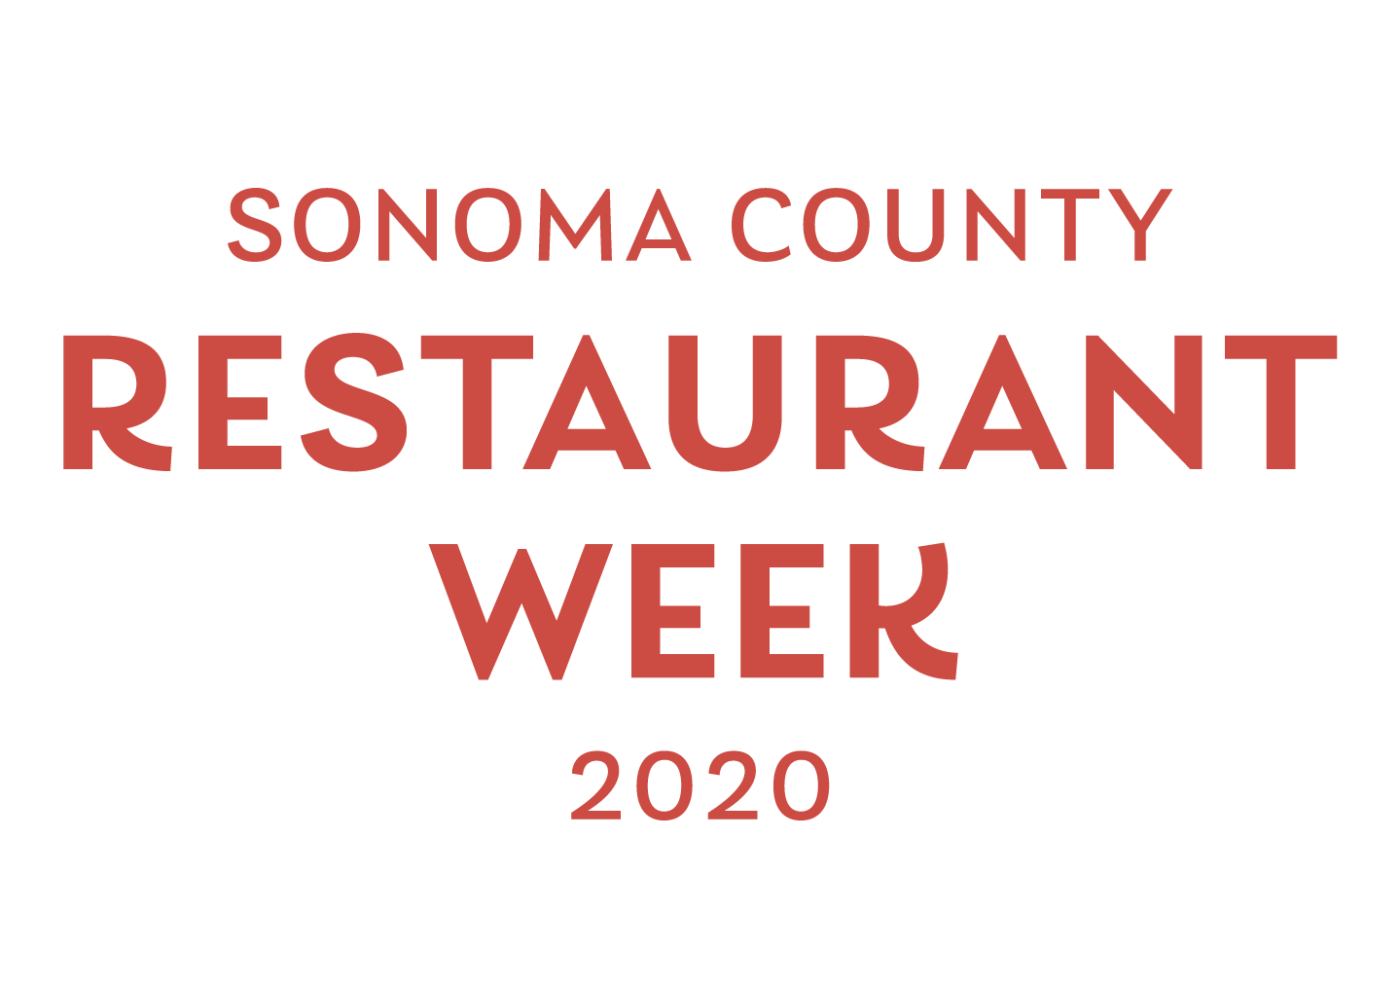 Sonoma County Restaurant Week 2020 logo